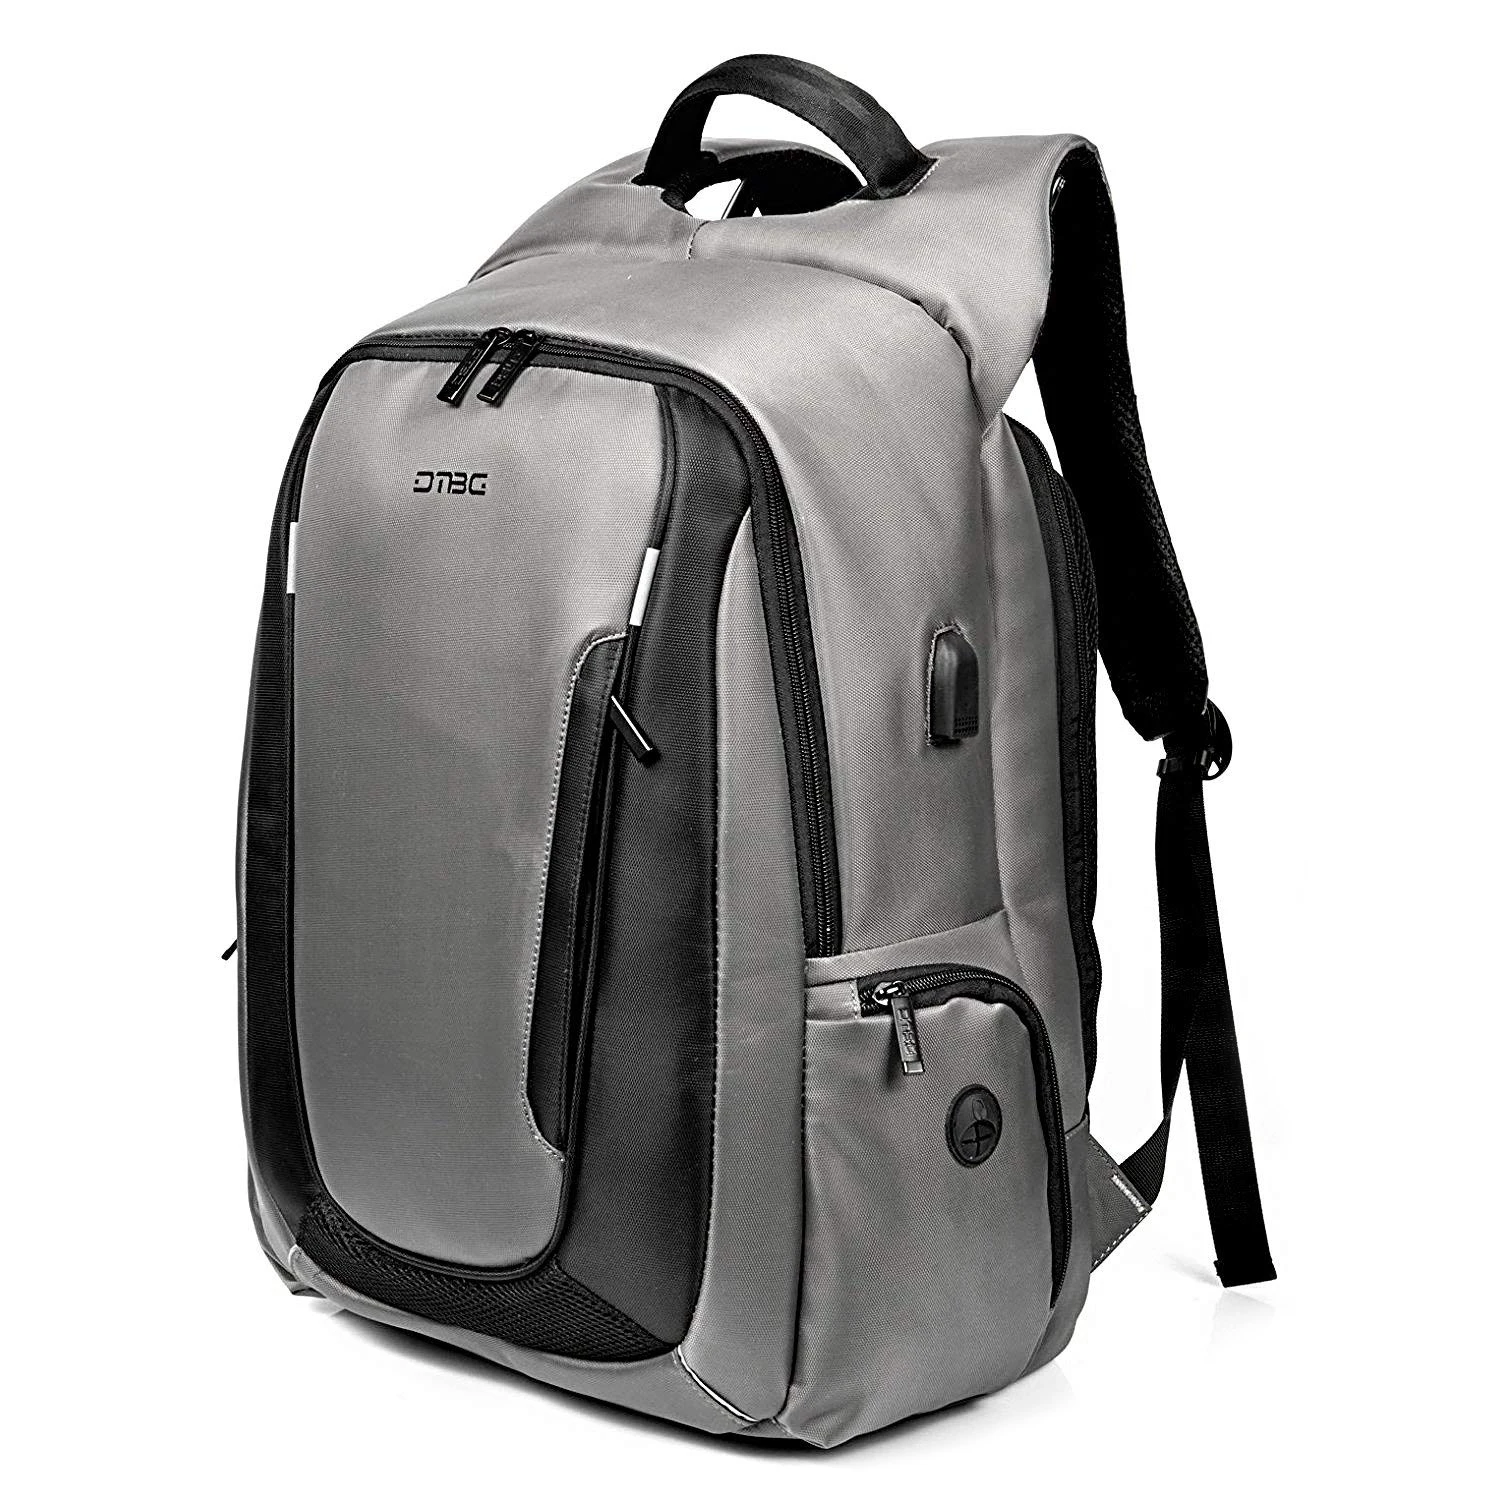 

DTBG 17.3 Inch Laptop Backpack Travel Backpack Nylon Rucksack Water Resistant Daypack with USB Port fit 17-17.3 Inch Laptop